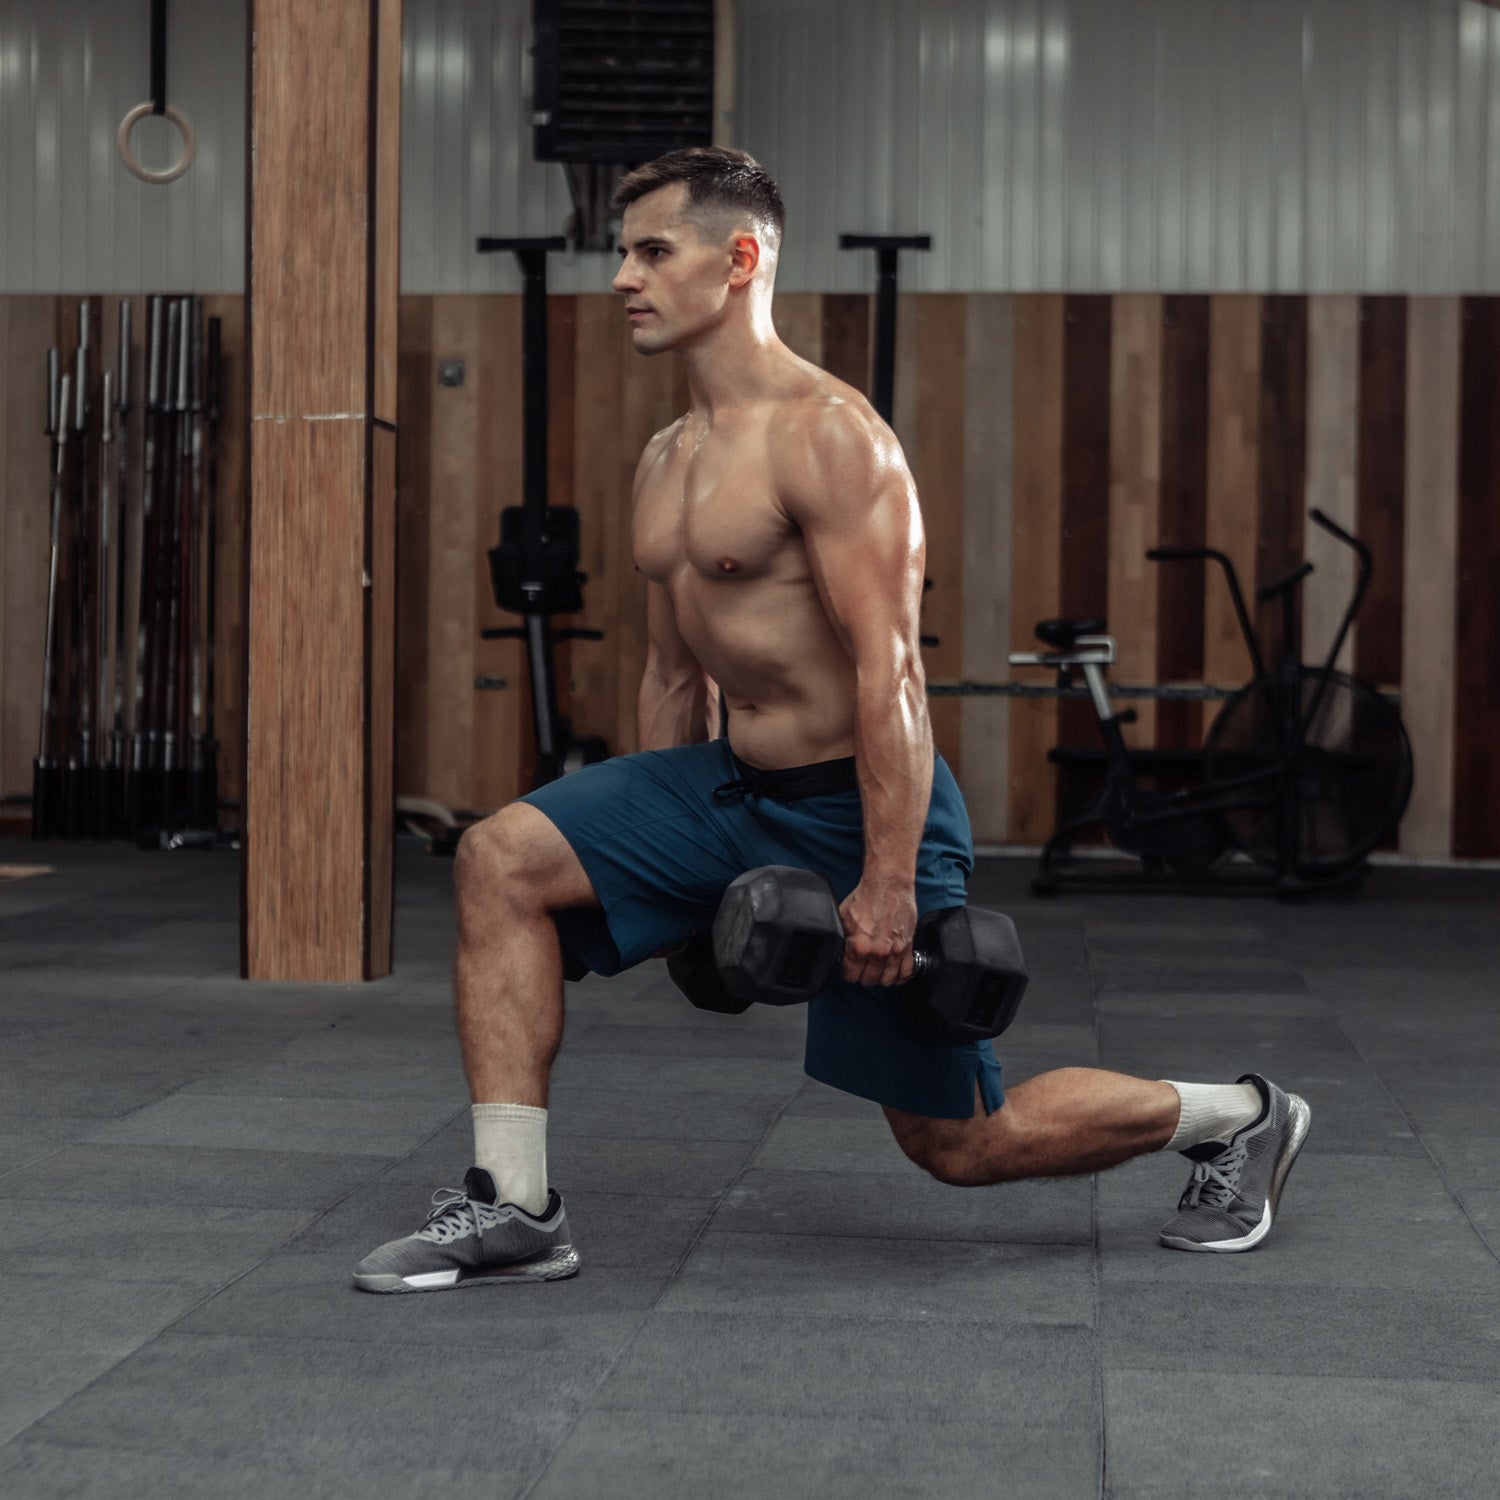 Six Unilateral Dumbbell Leg Exercises To Build Lower Body Strength